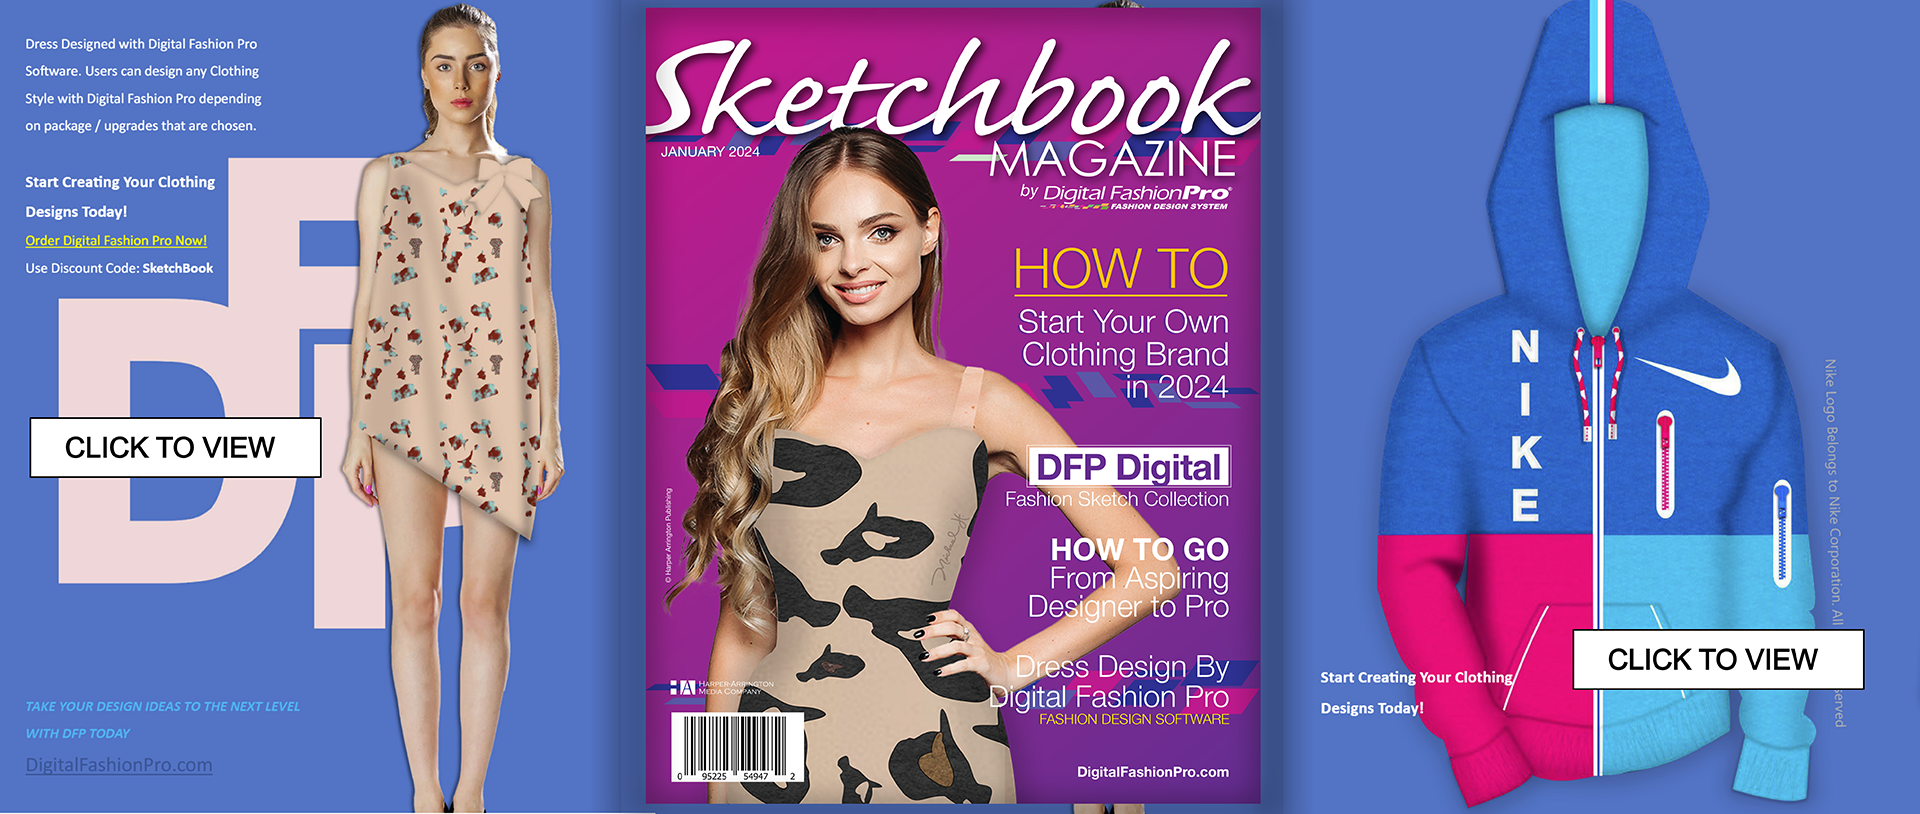 SketchBook Magazine - the fashion magazine by Digital Fashion Pro fashion design software - become a fashion designer